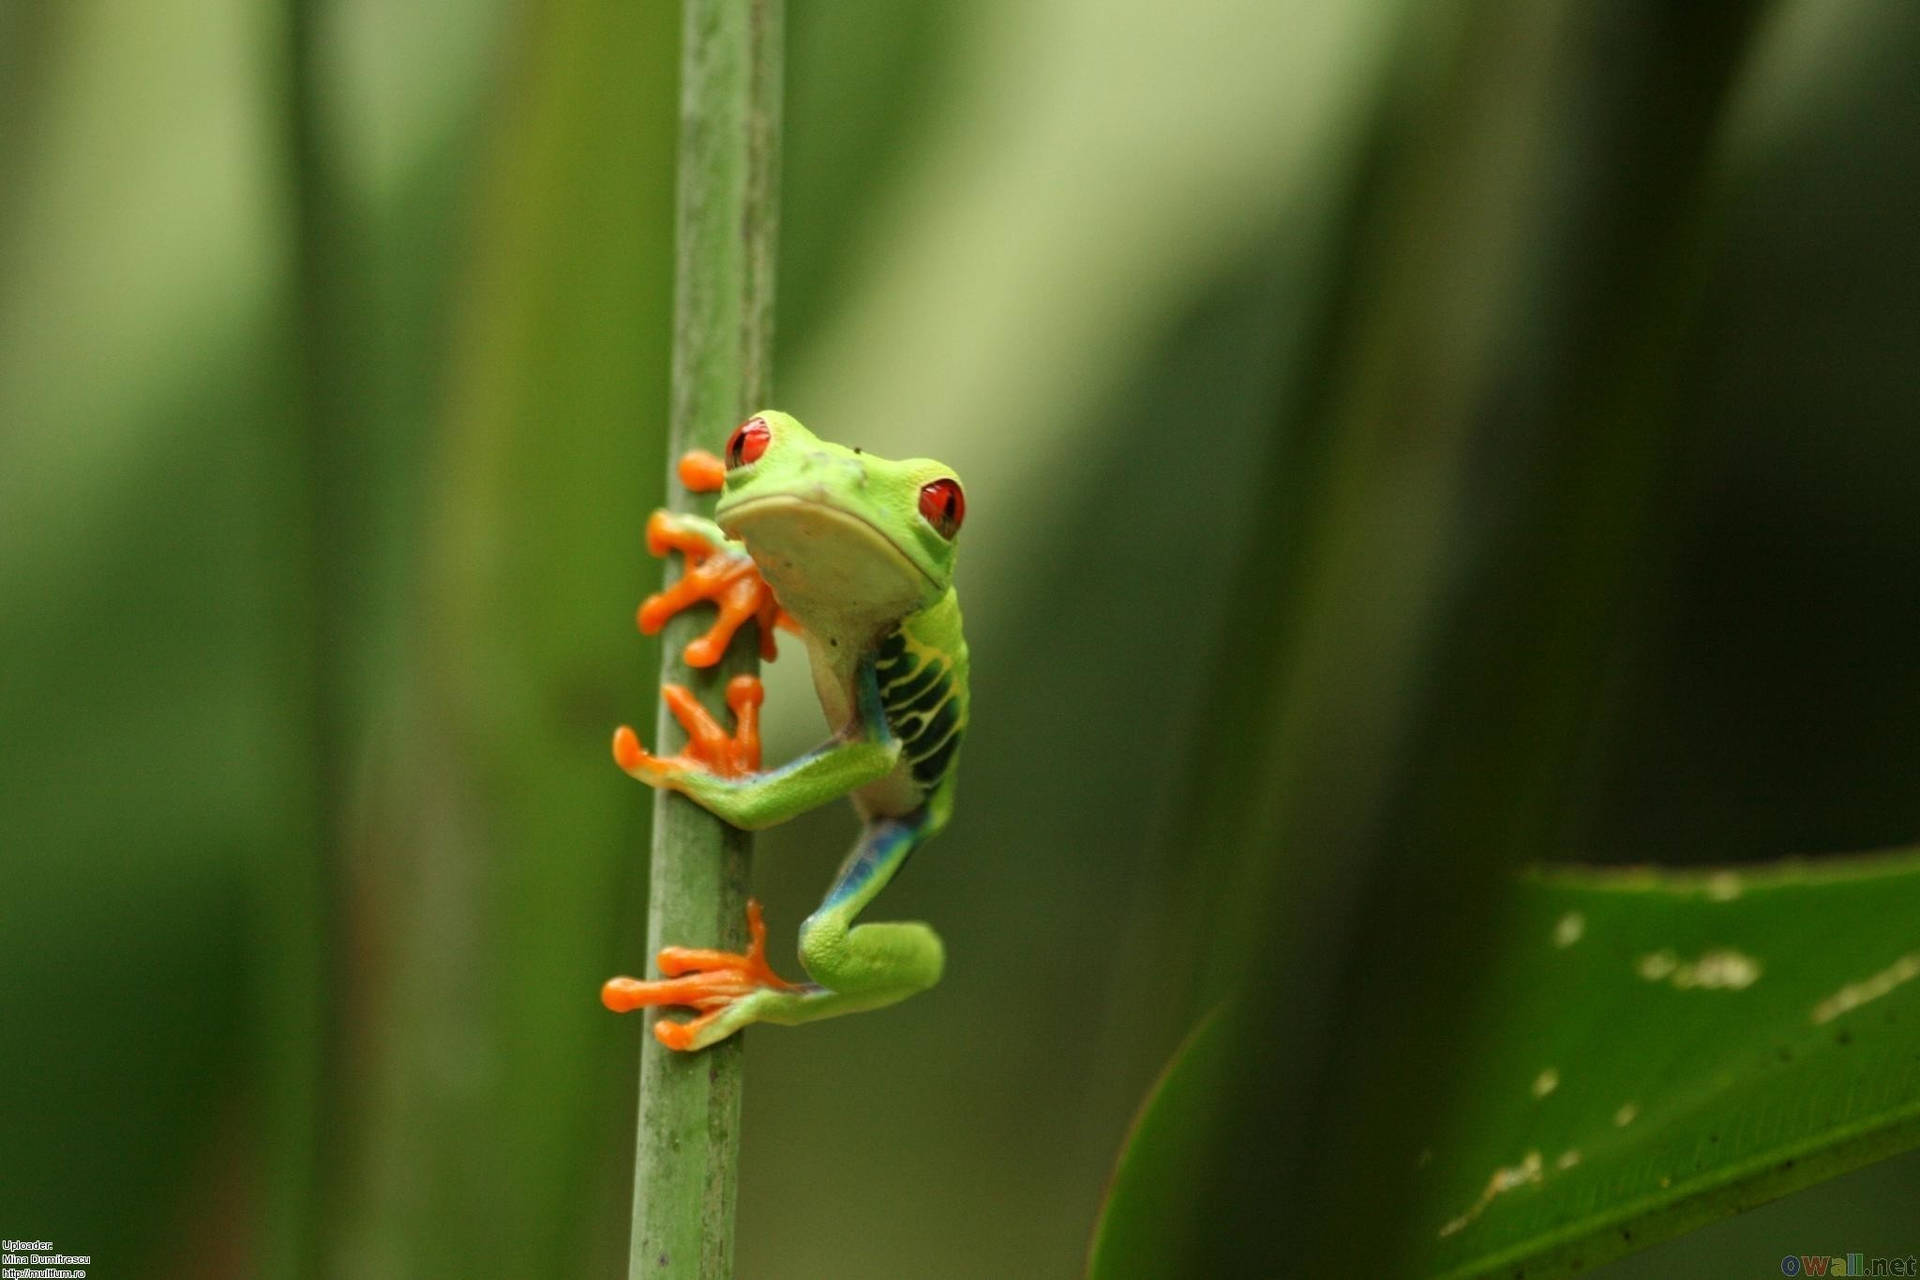 Climbing Red-eyed Kawaii Frog Background